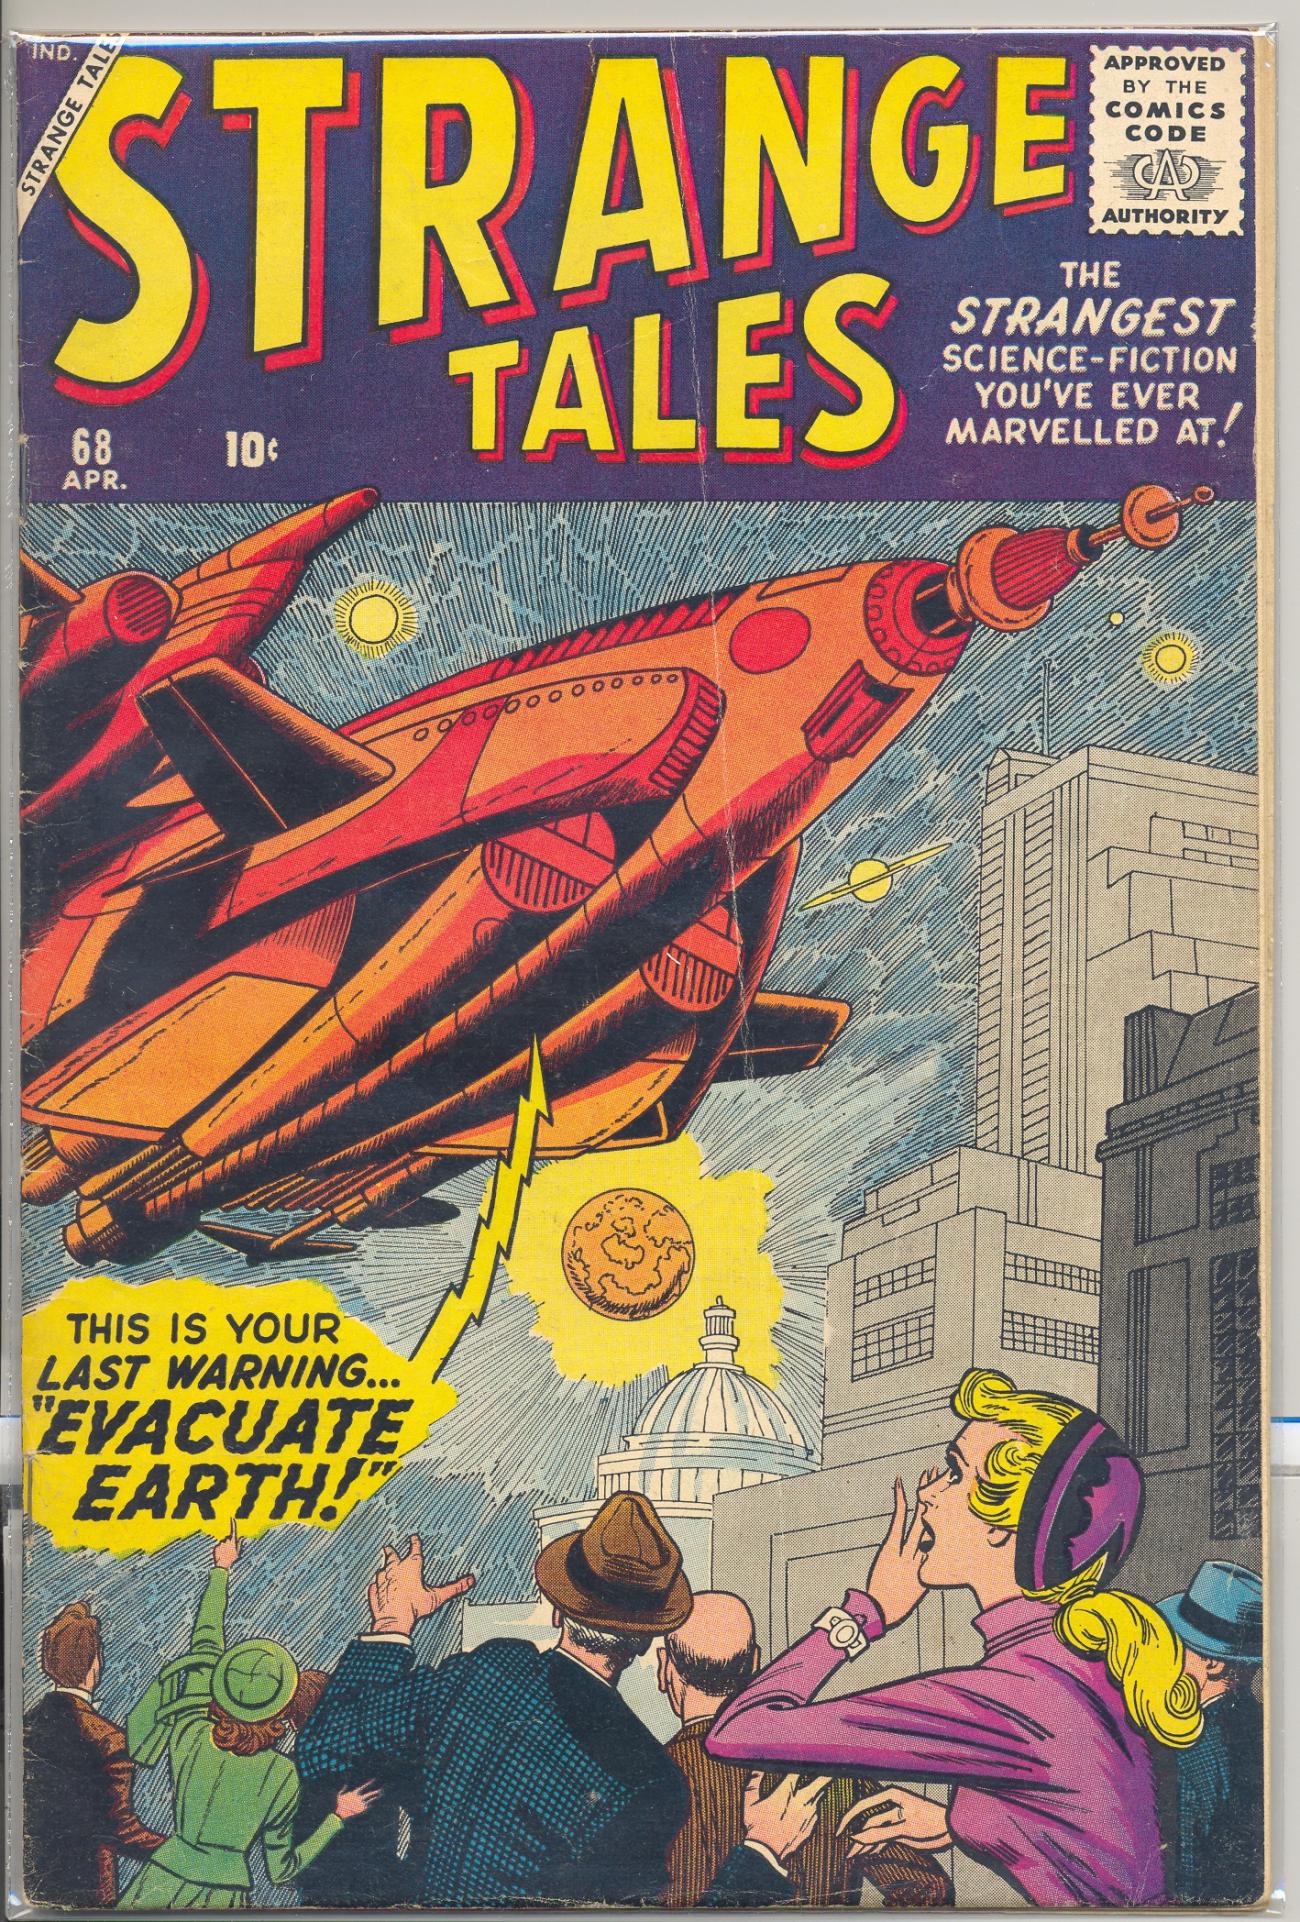 ComicConnect - STRANGE TALES (1951-76) #68 - VG/F: 5.0